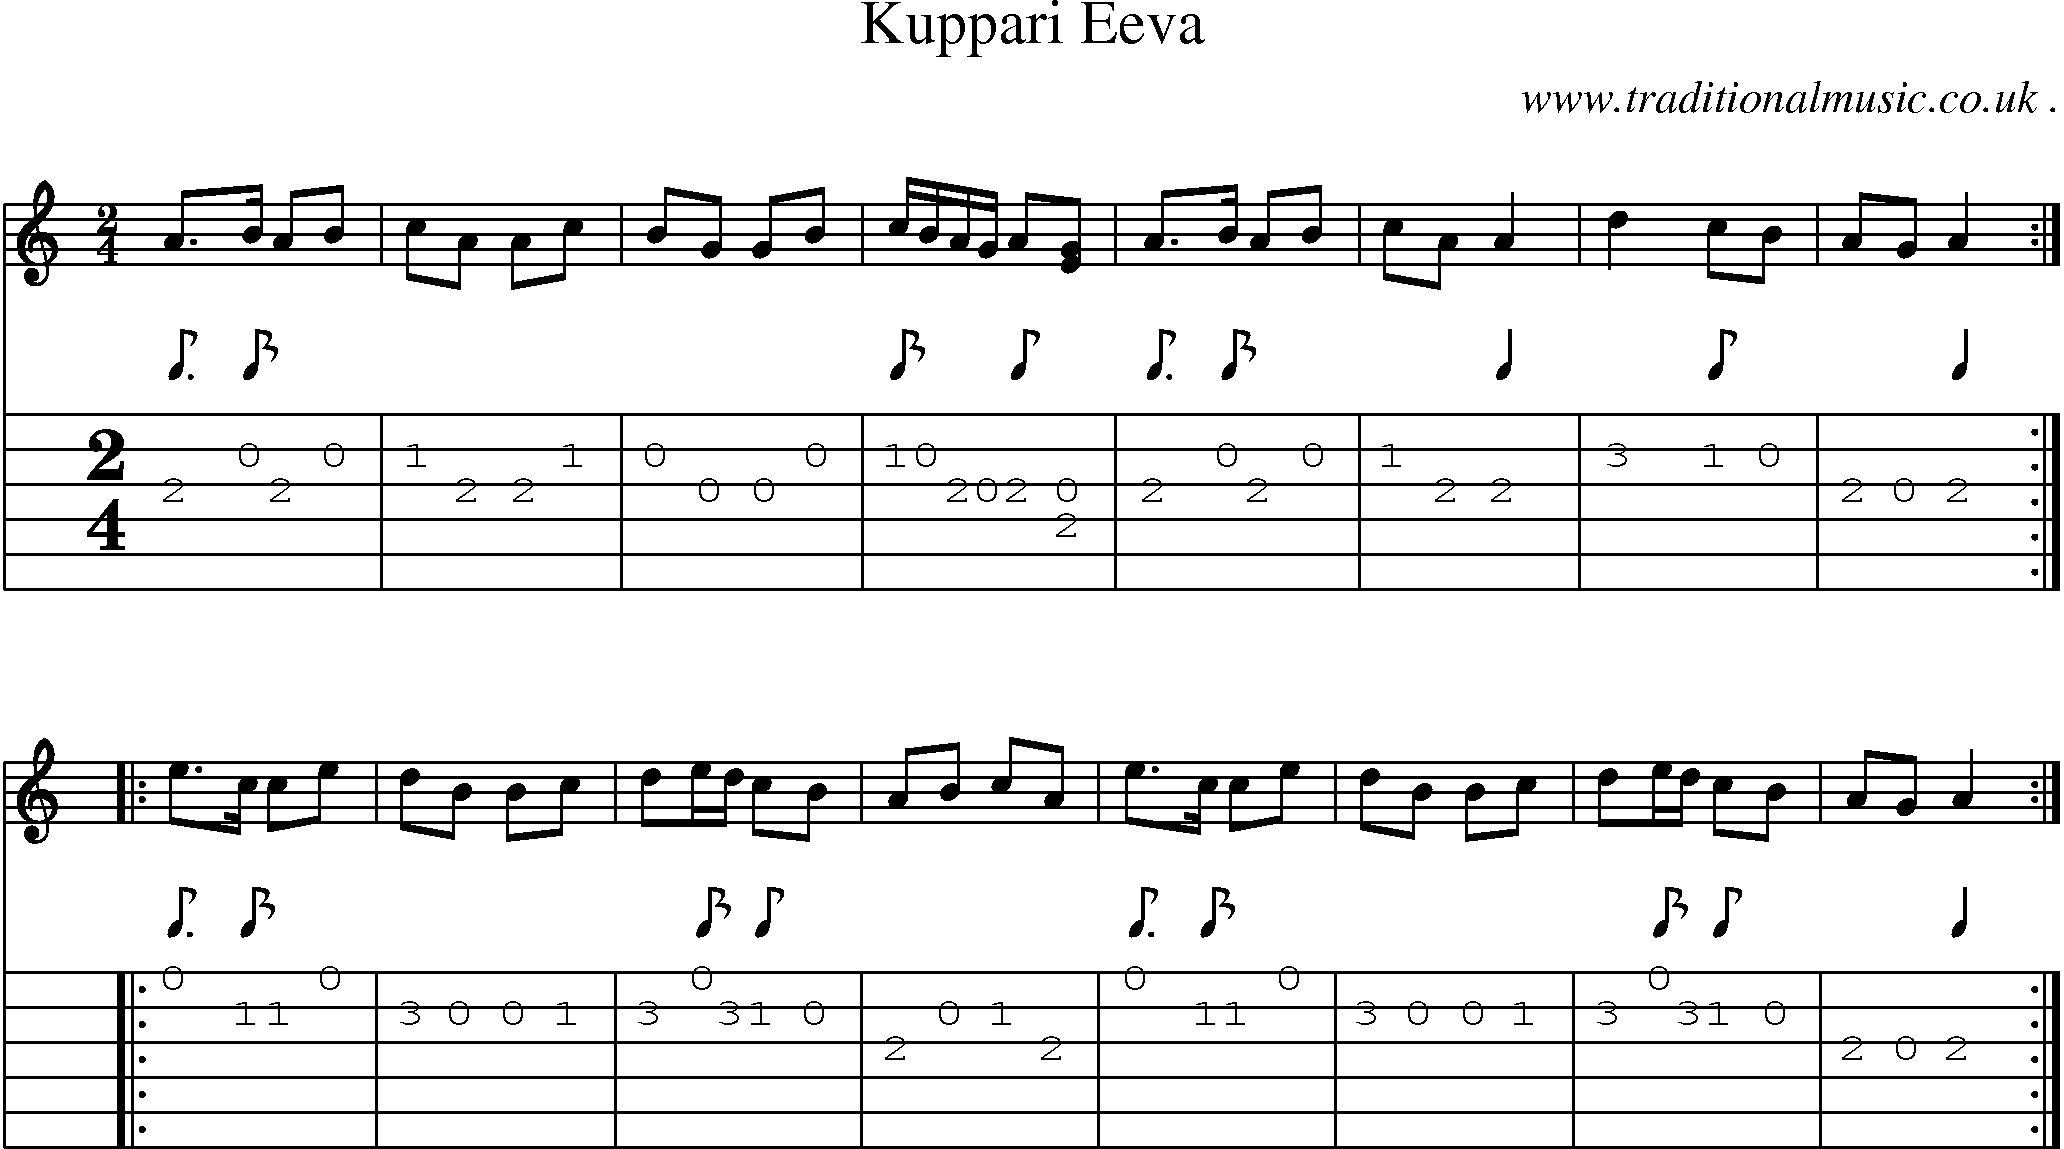 Sheet-Music and Guitar Tabs for Kuppari Eeva